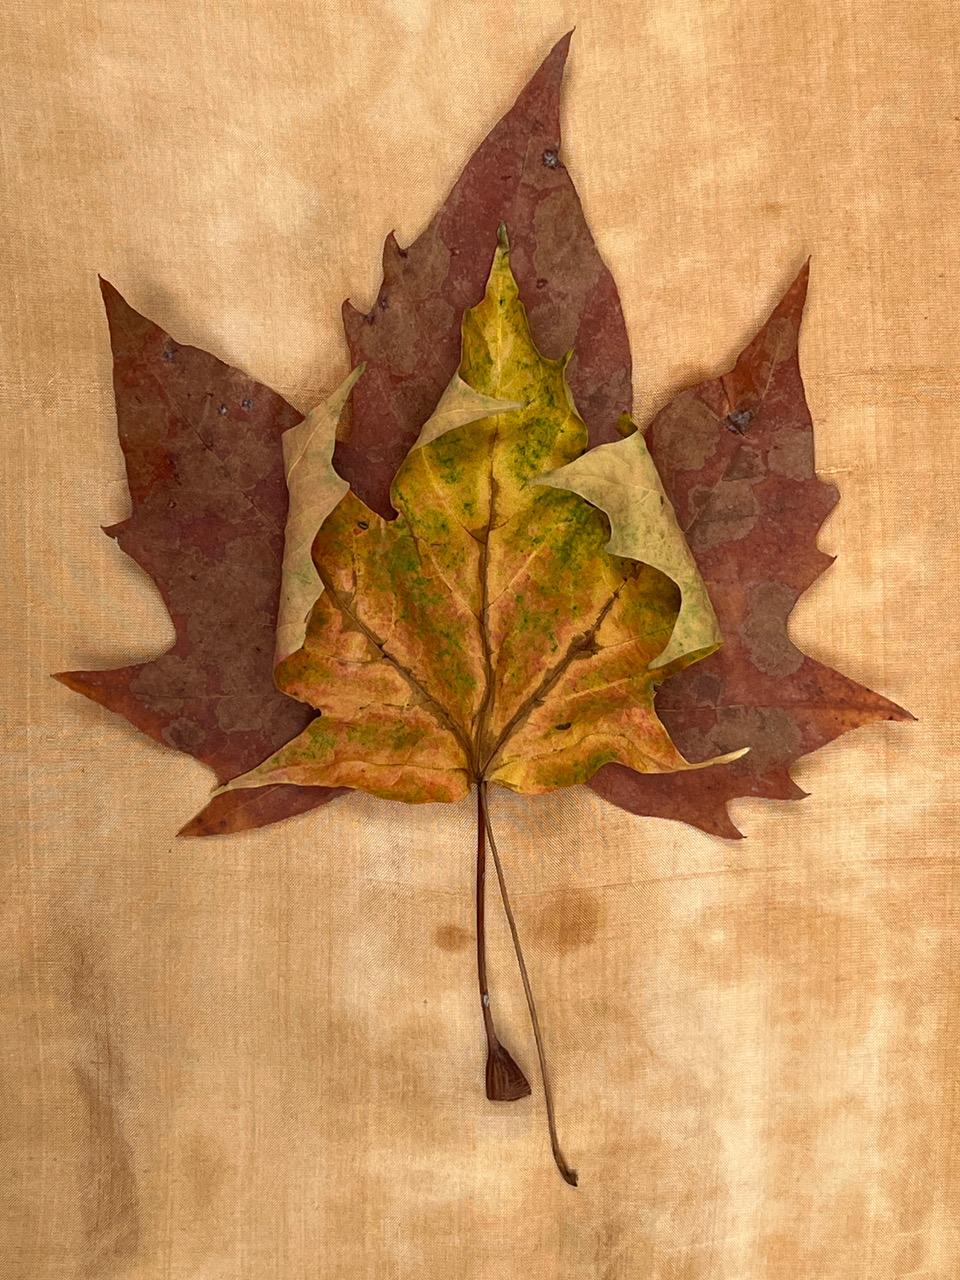 Paul Cava Still-Life Photograph - Untitled #3617 from "Leaves" series: nature still-life leaf photograph w/ orange